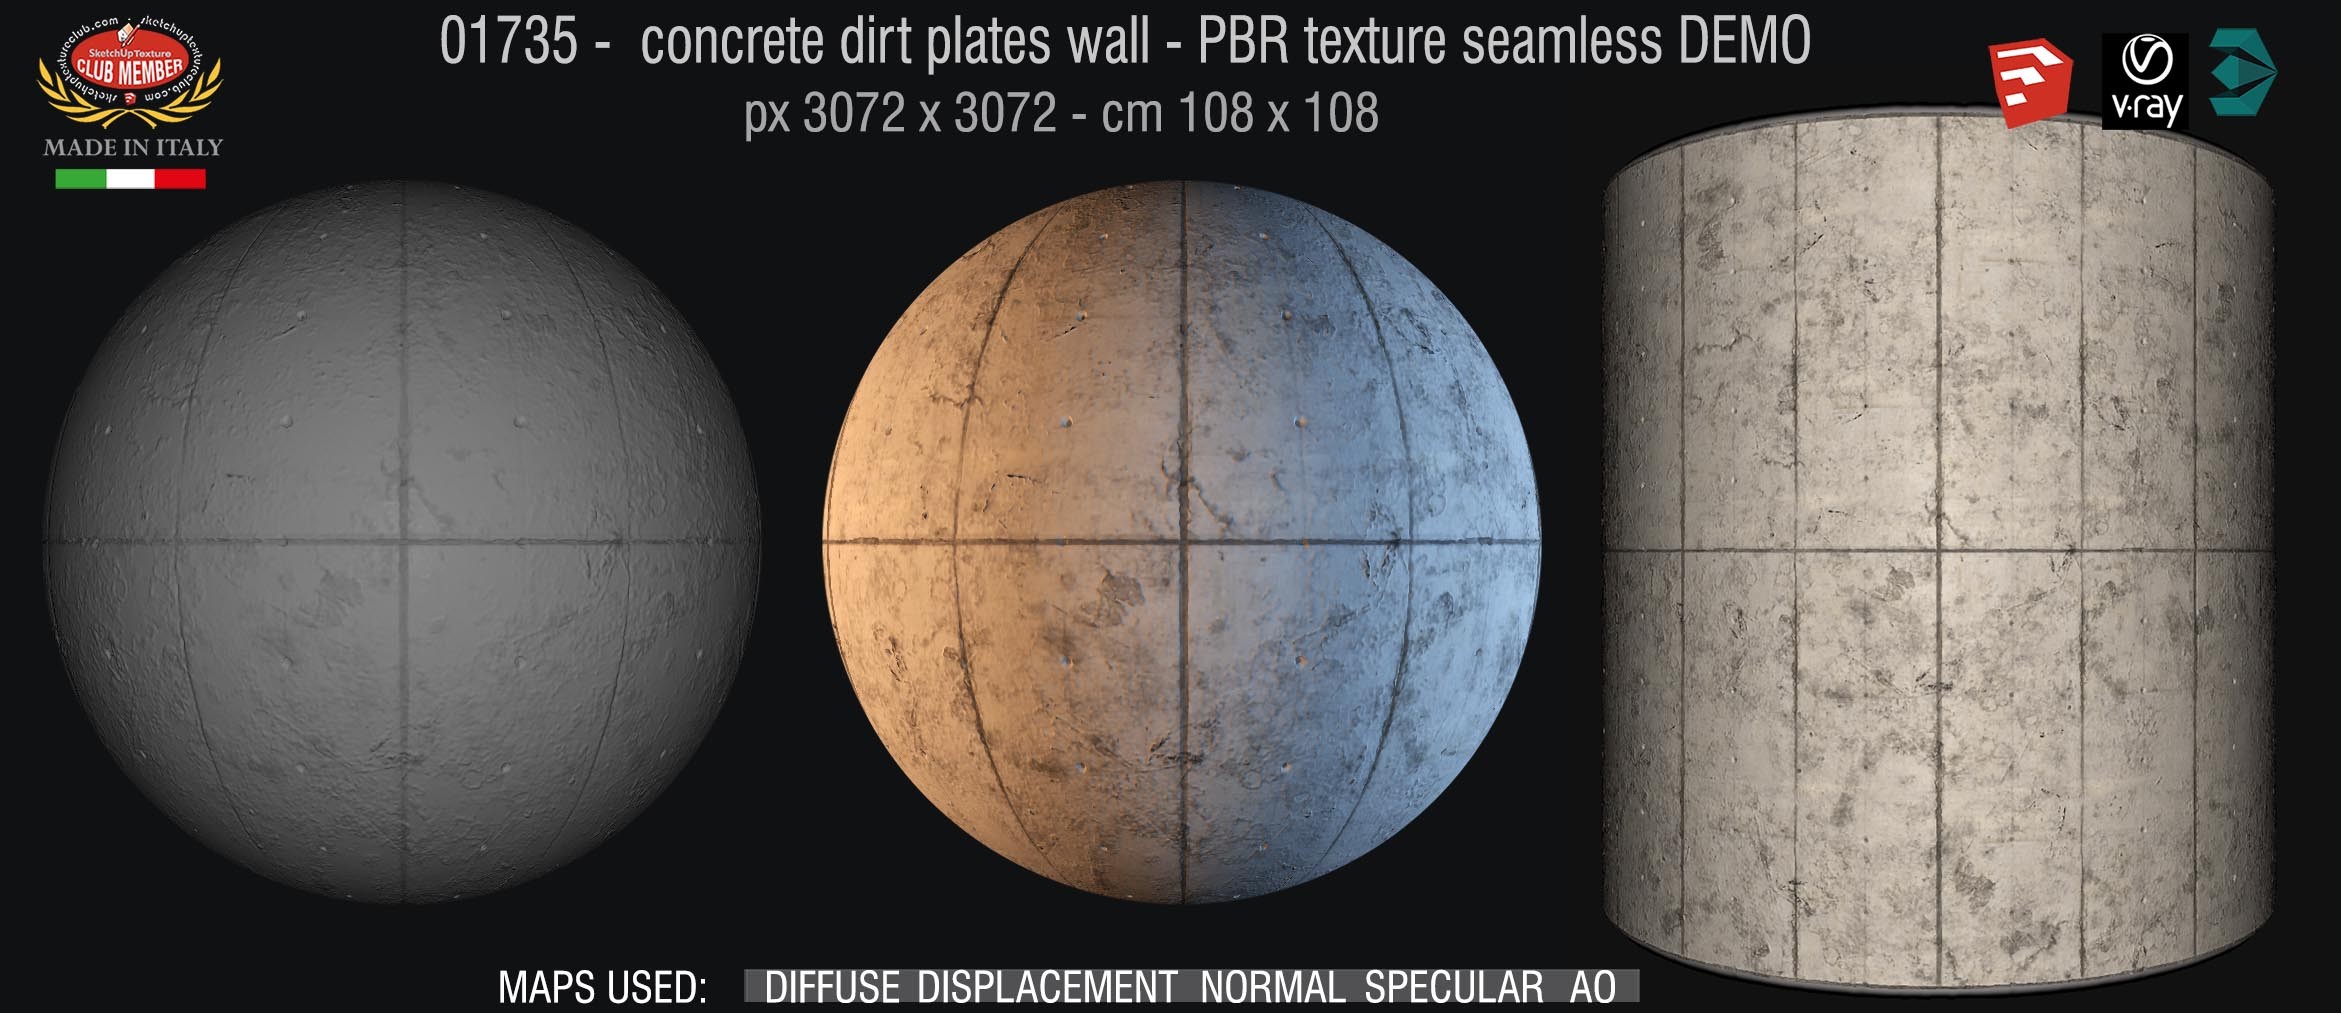 01735 concrete dirt plates wall PBR texture seamless DEMO